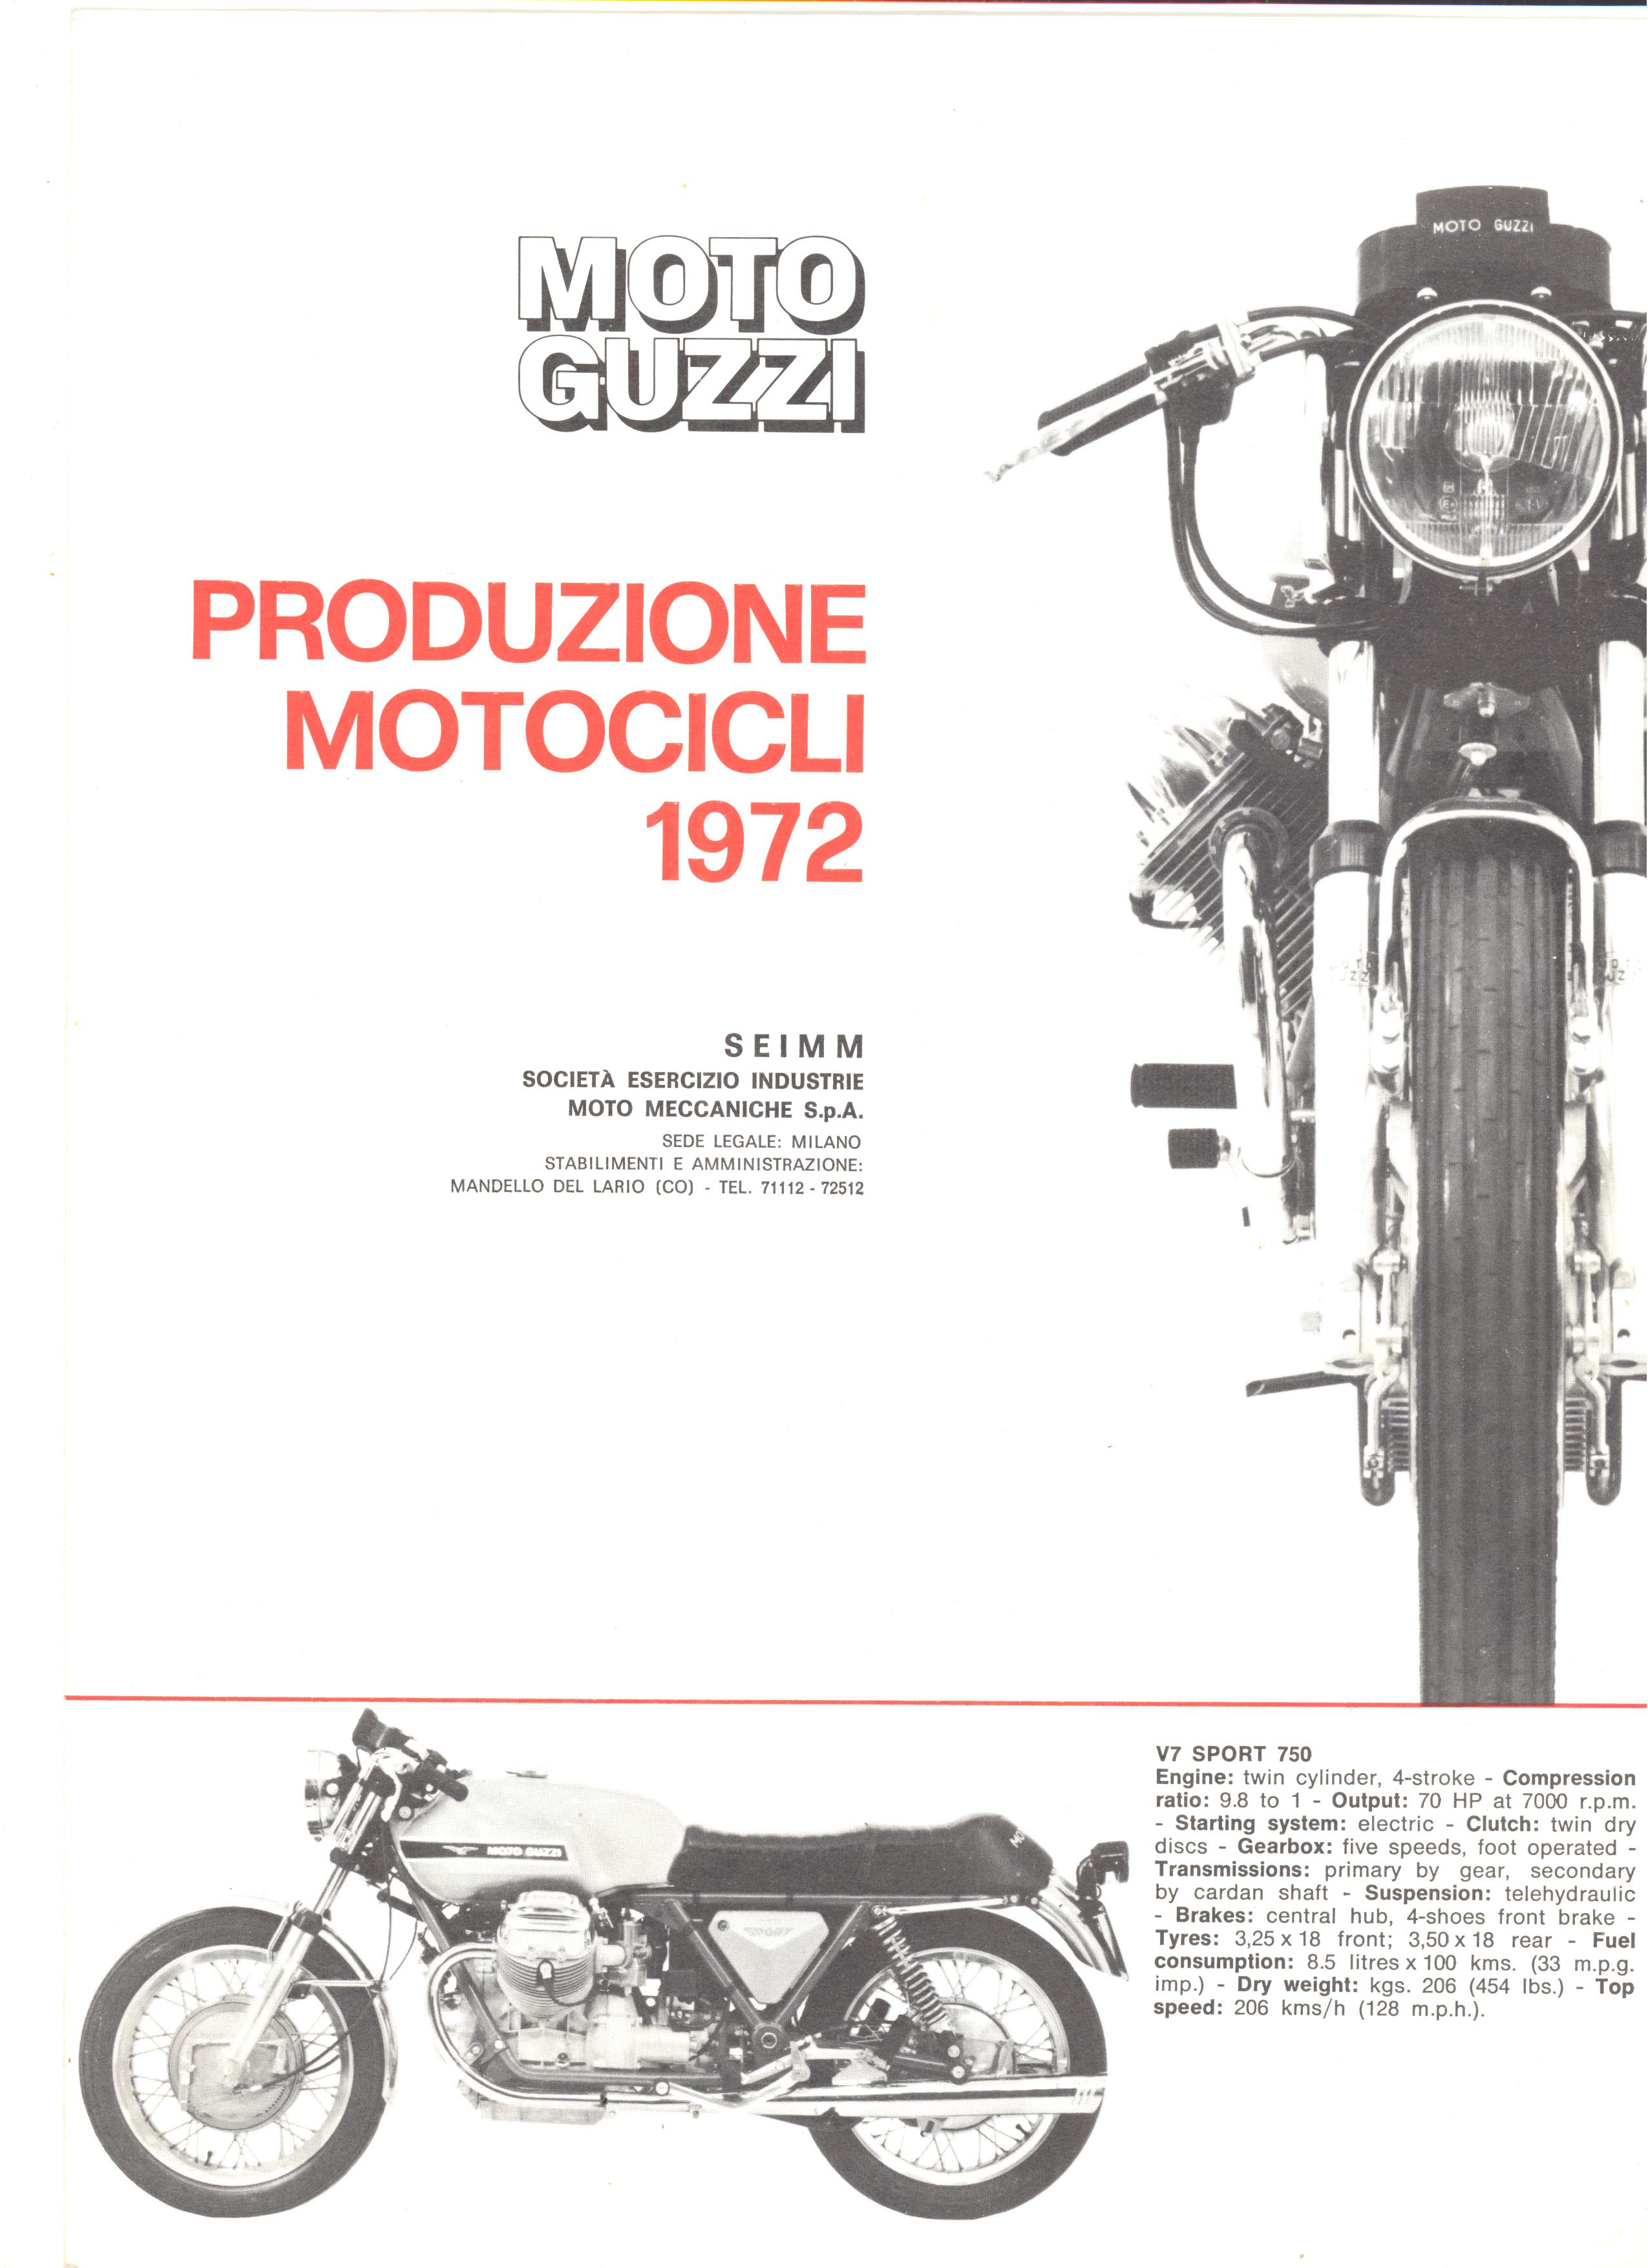 Moto Guzzi factory brochure: 1972 Production Motorcycles